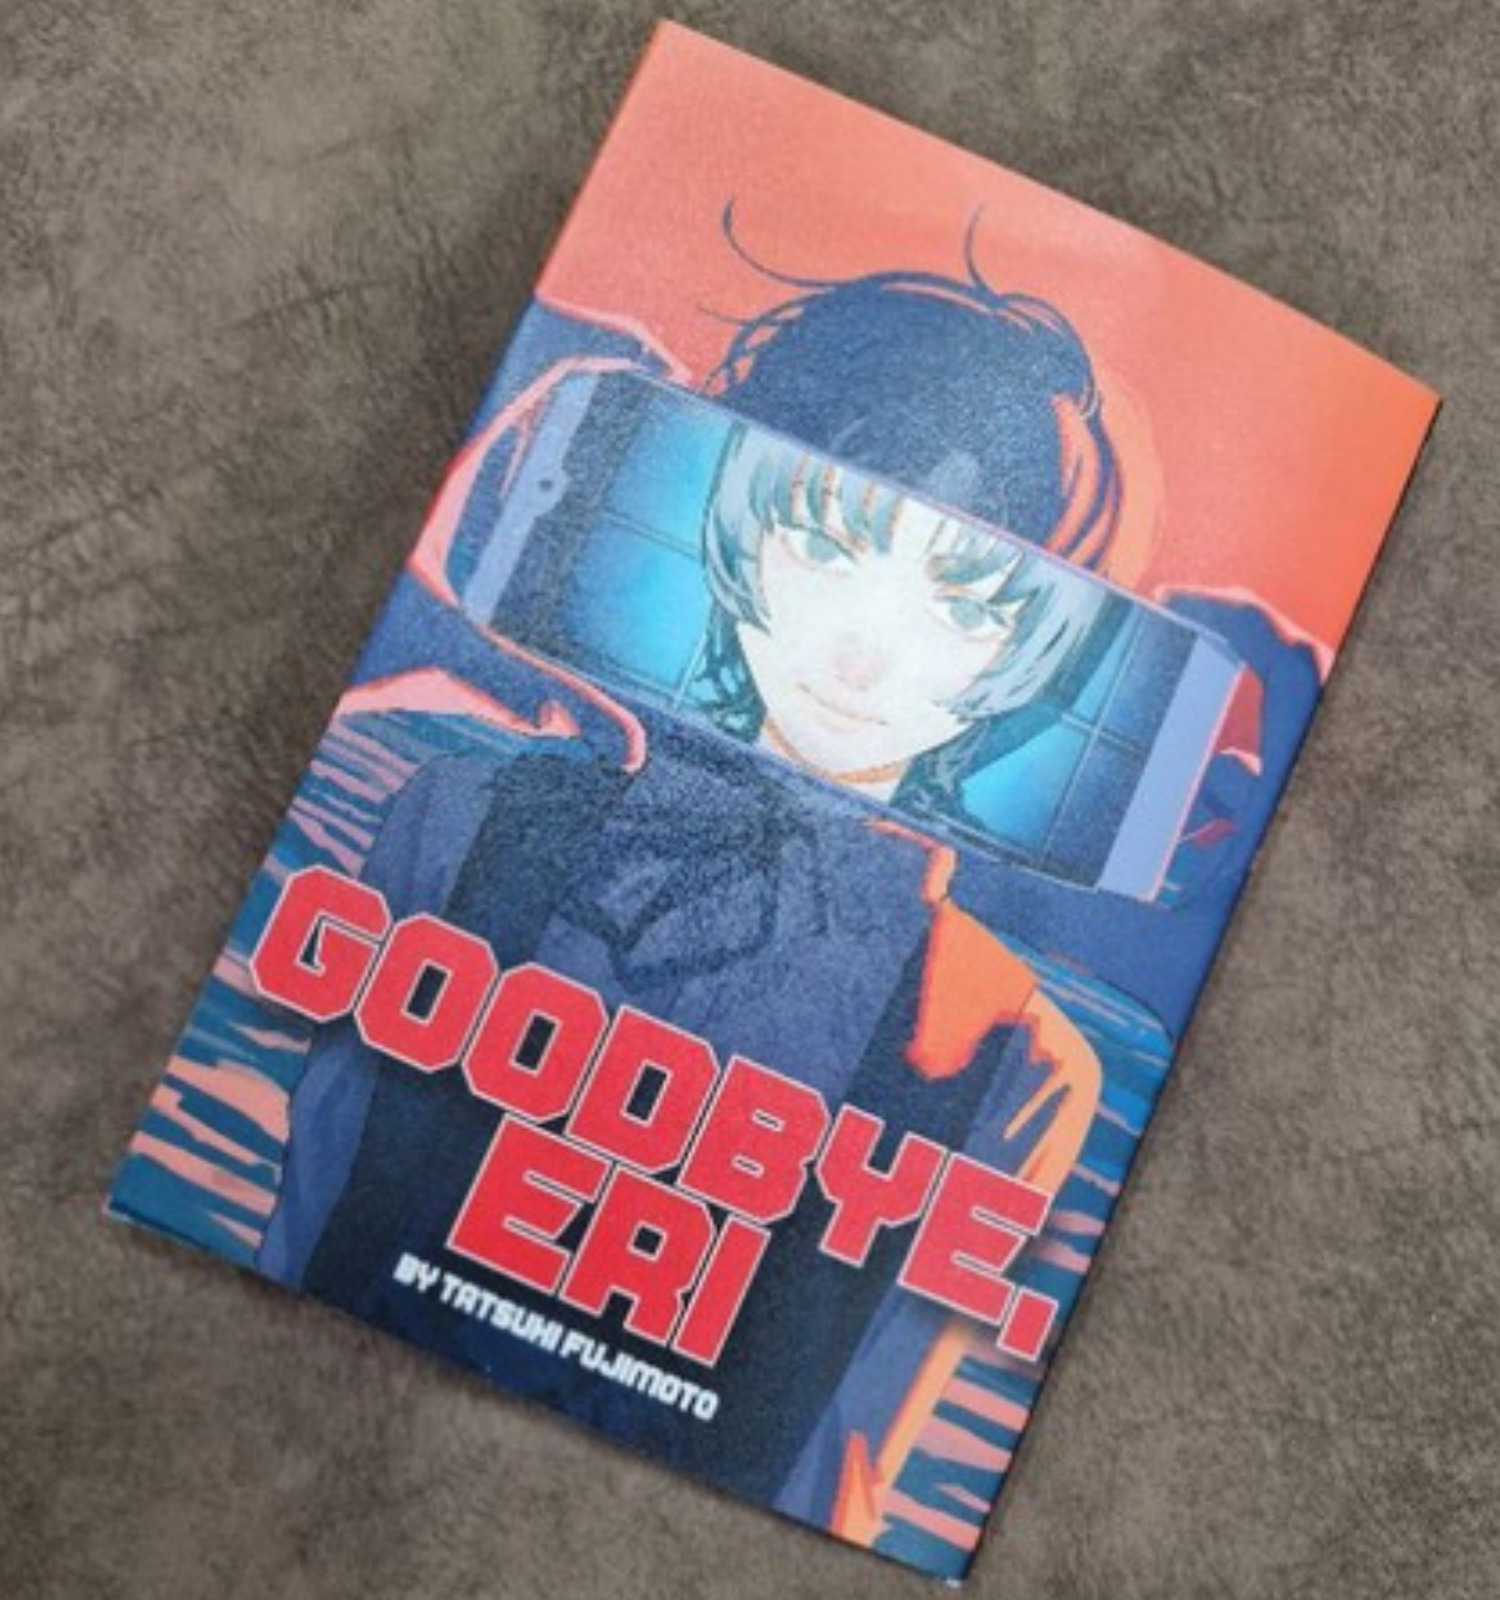 Goodbye,Eri by Tatsuki Fujimoto One Shot Manga English Version Comic Book